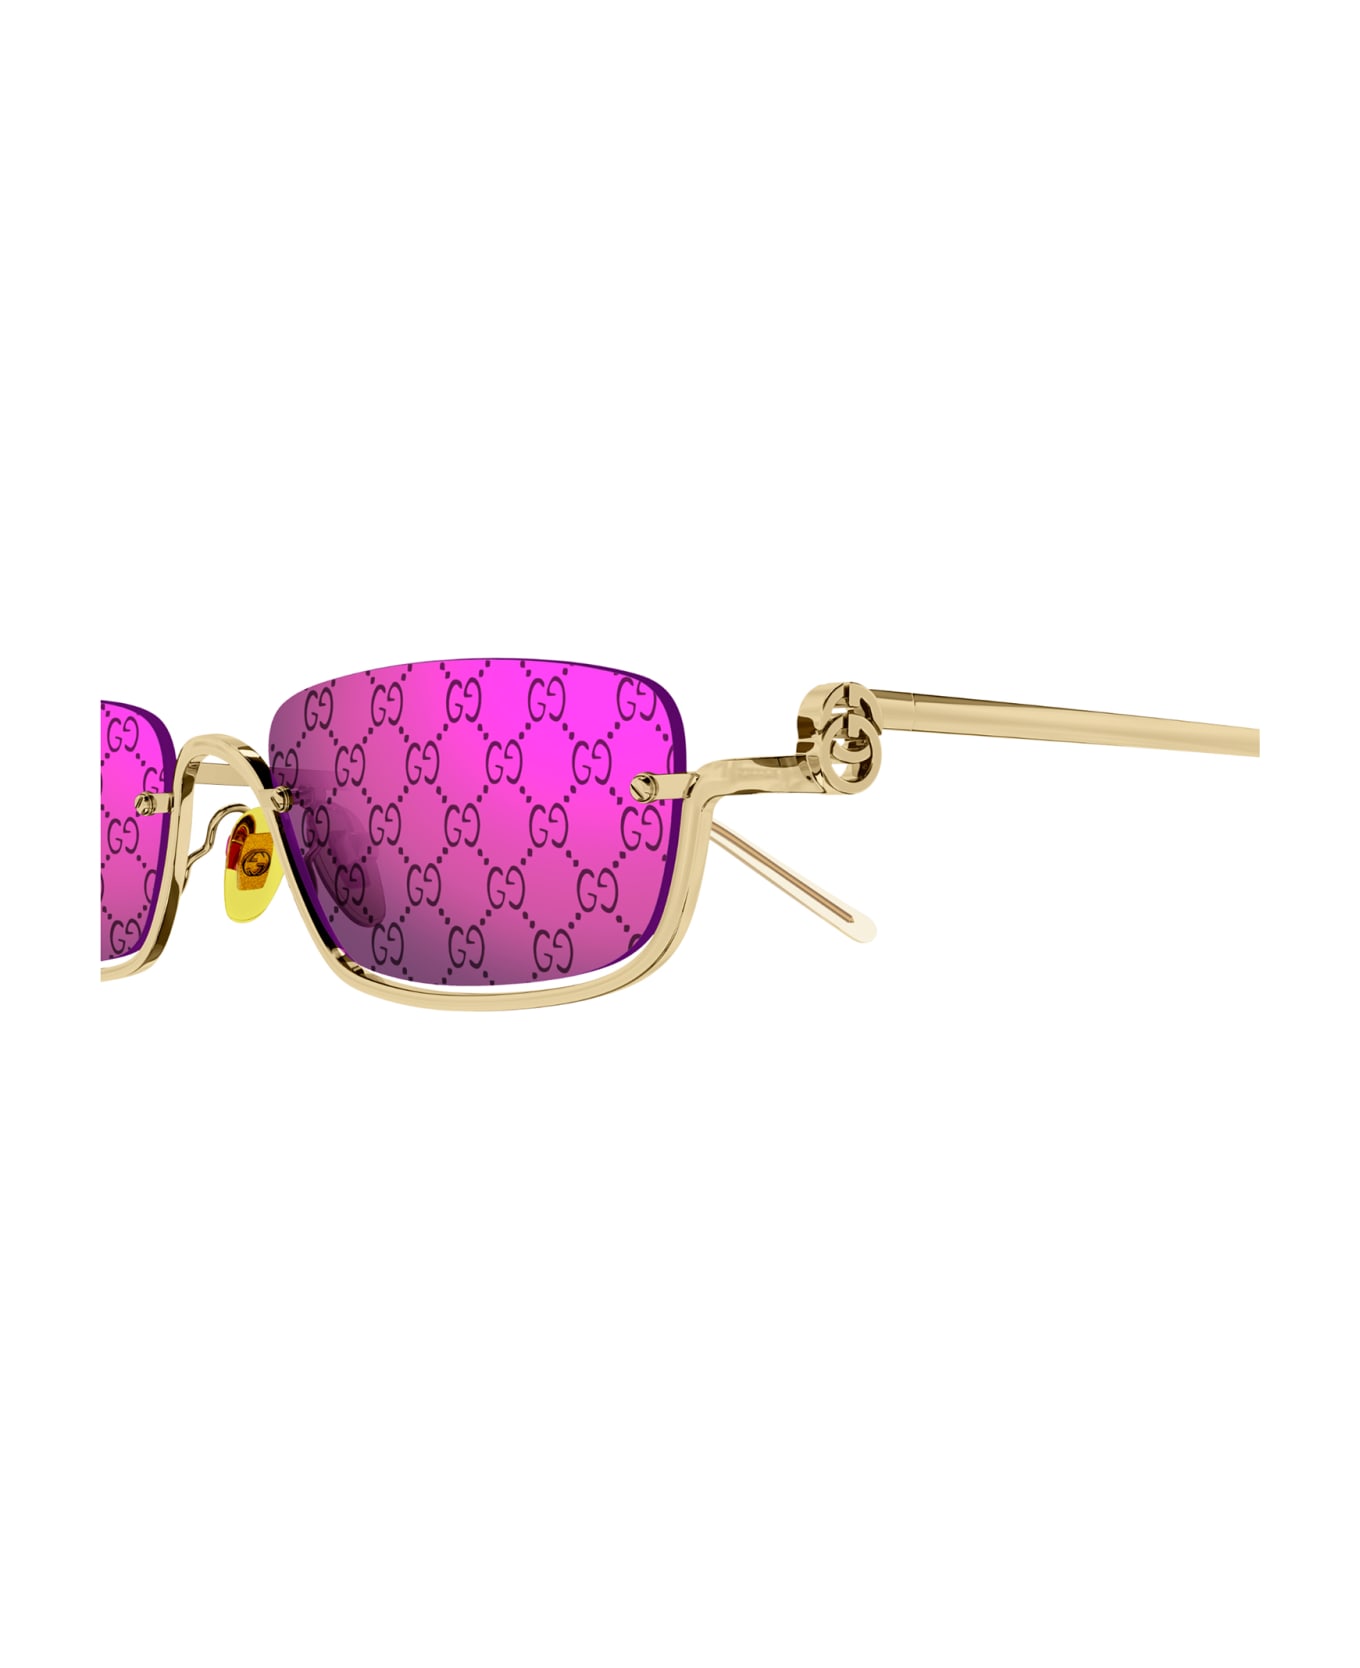 Gucci Eyewear 1fa64li0a - 005 gold gold violet サングラス